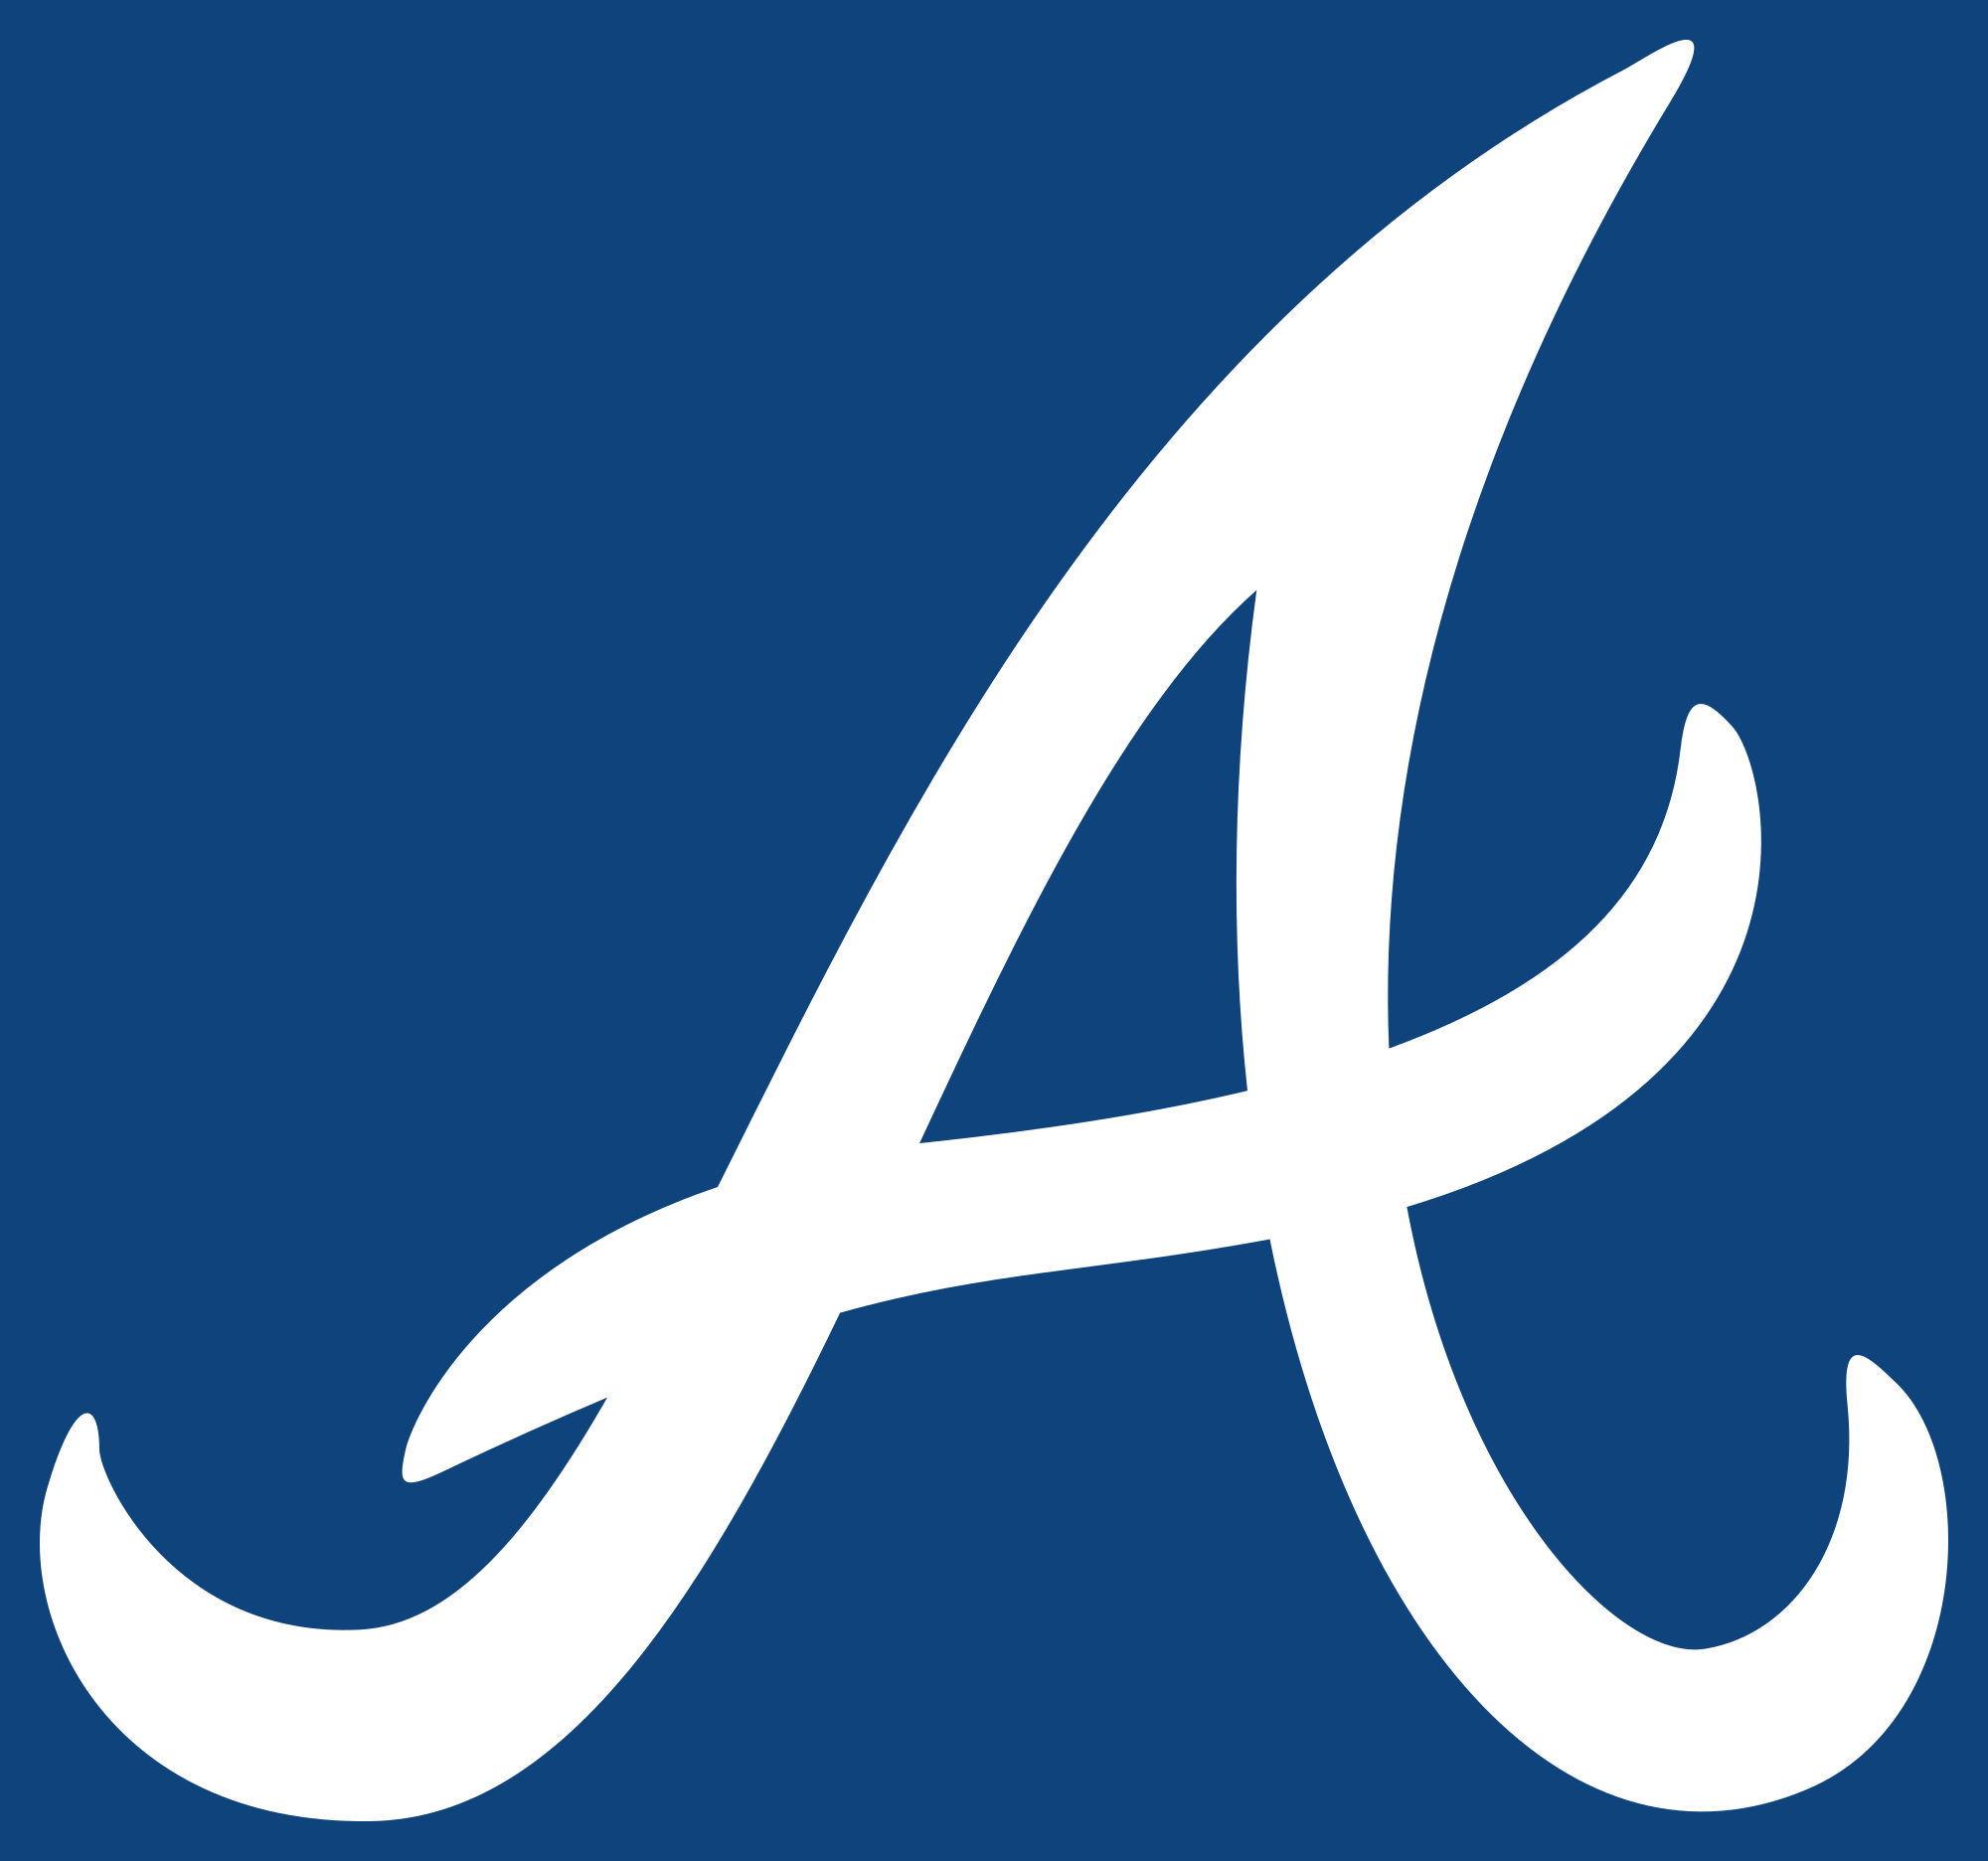 Atlanta Braves Logos (PSD)